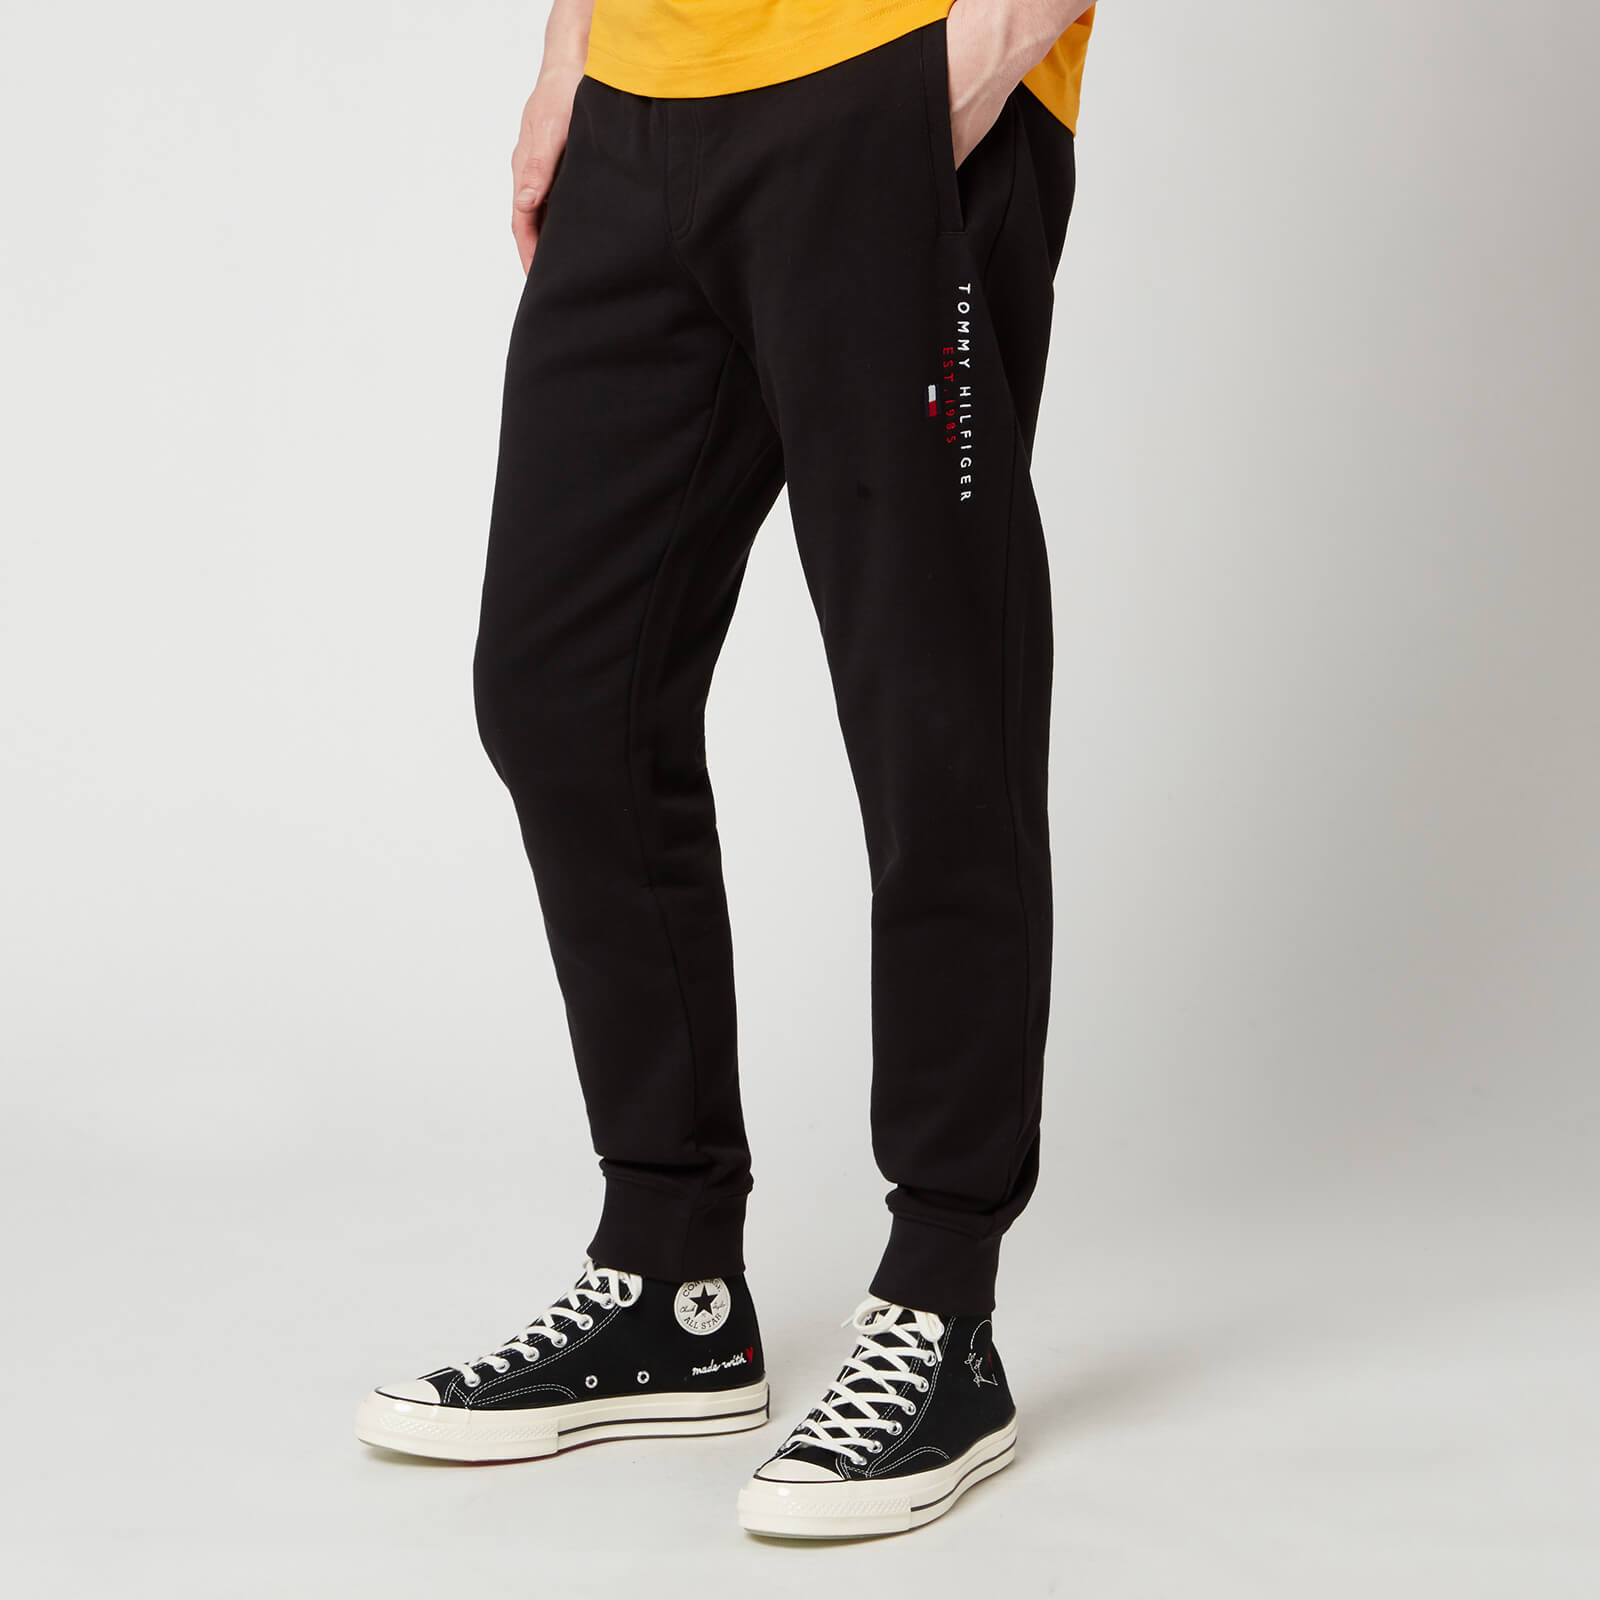 Tommy Hilfiger Men's Essential Sweatpants - Black - S